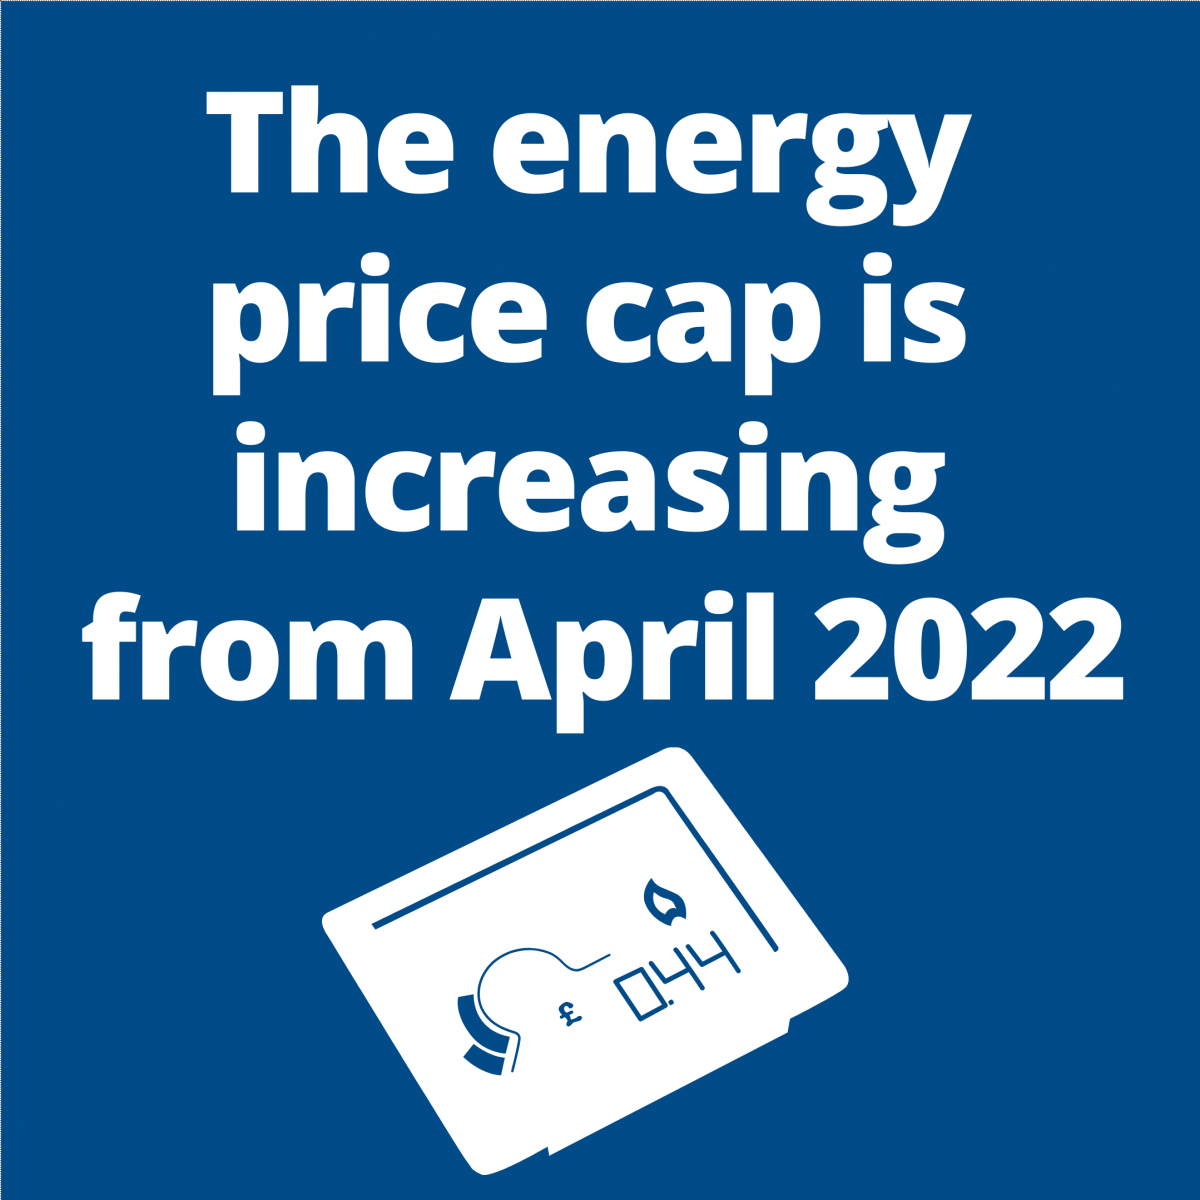 The energy price cap is increasing